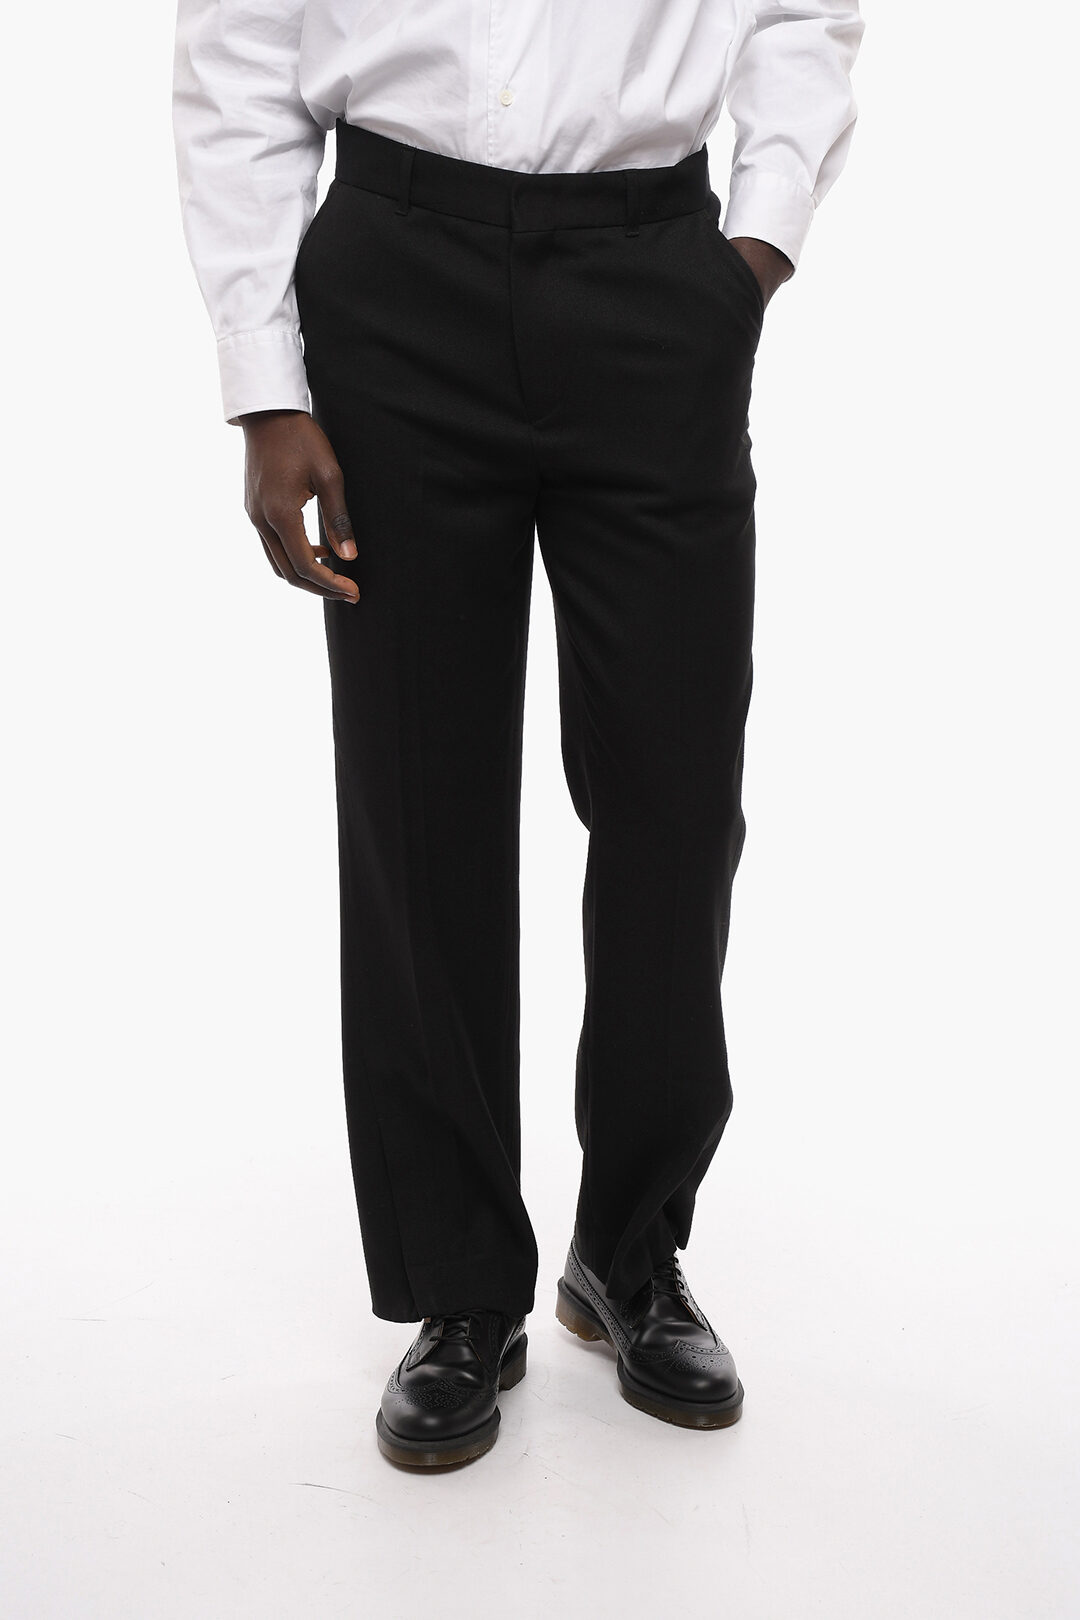 Formal black pants in textured fabric | The Kooples - US